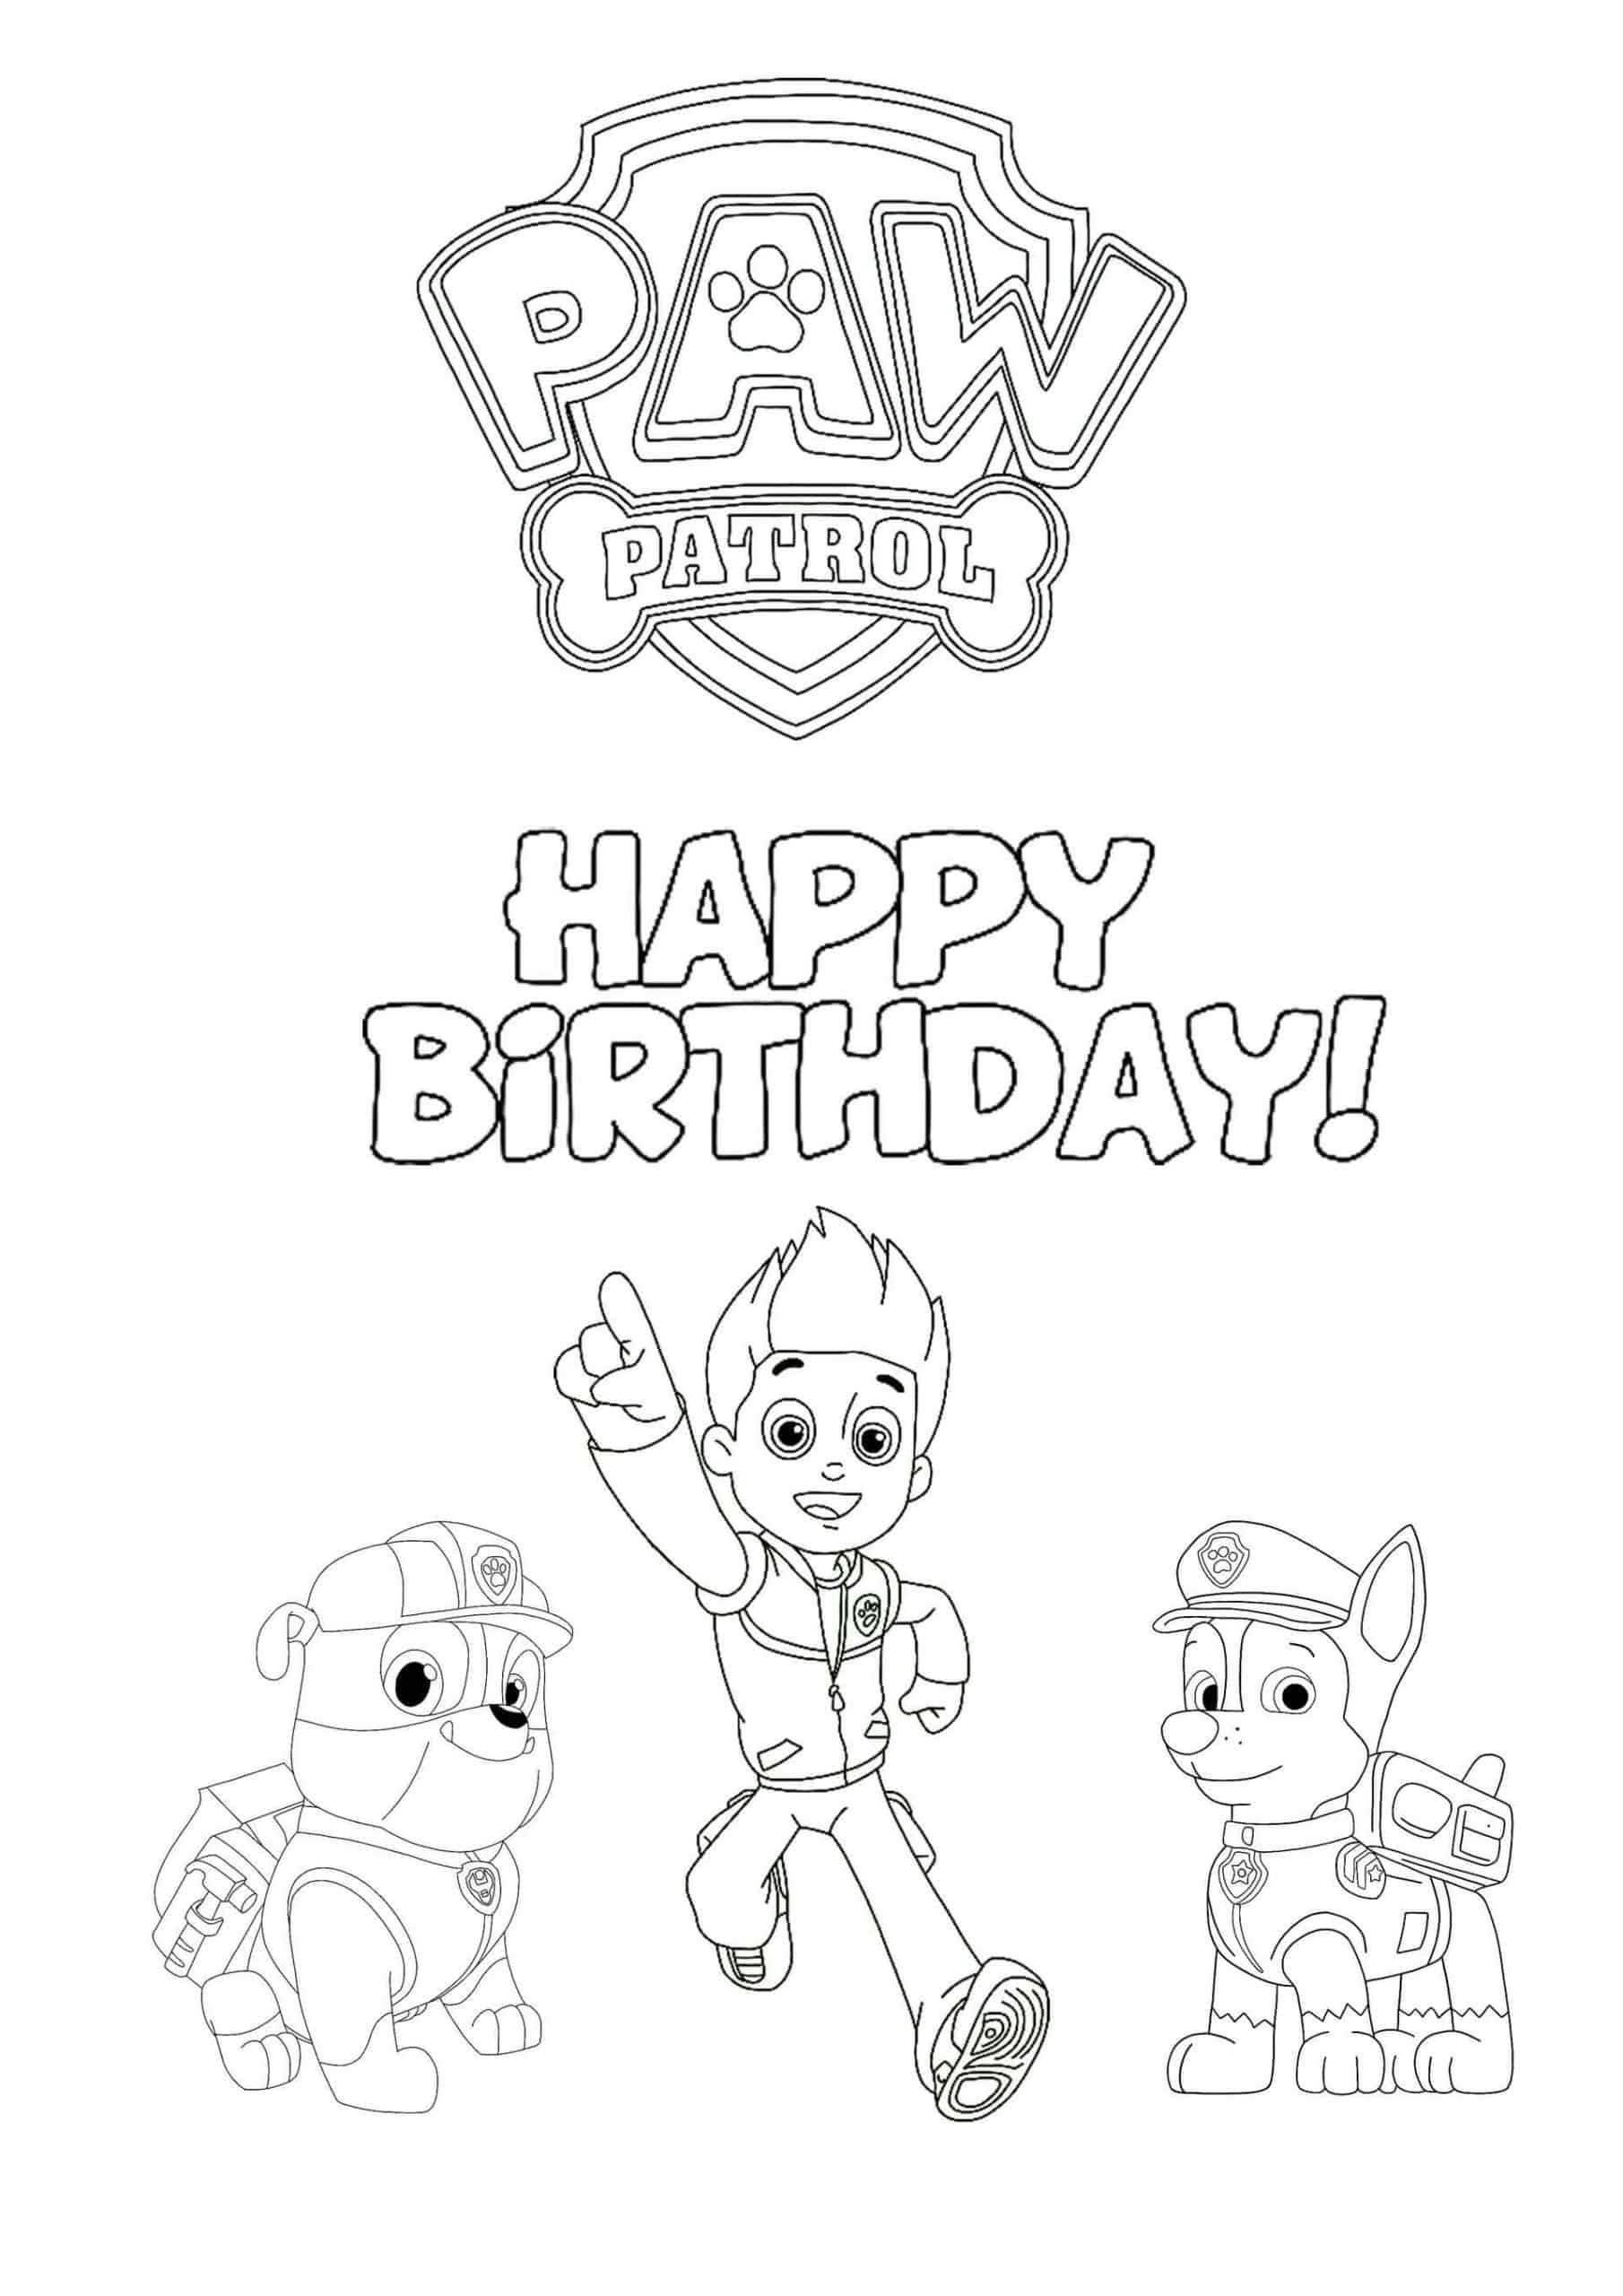 Paw patrol happy birthday coloring page birthday coloring pages paw patrol coloring pages paw patrol coloring